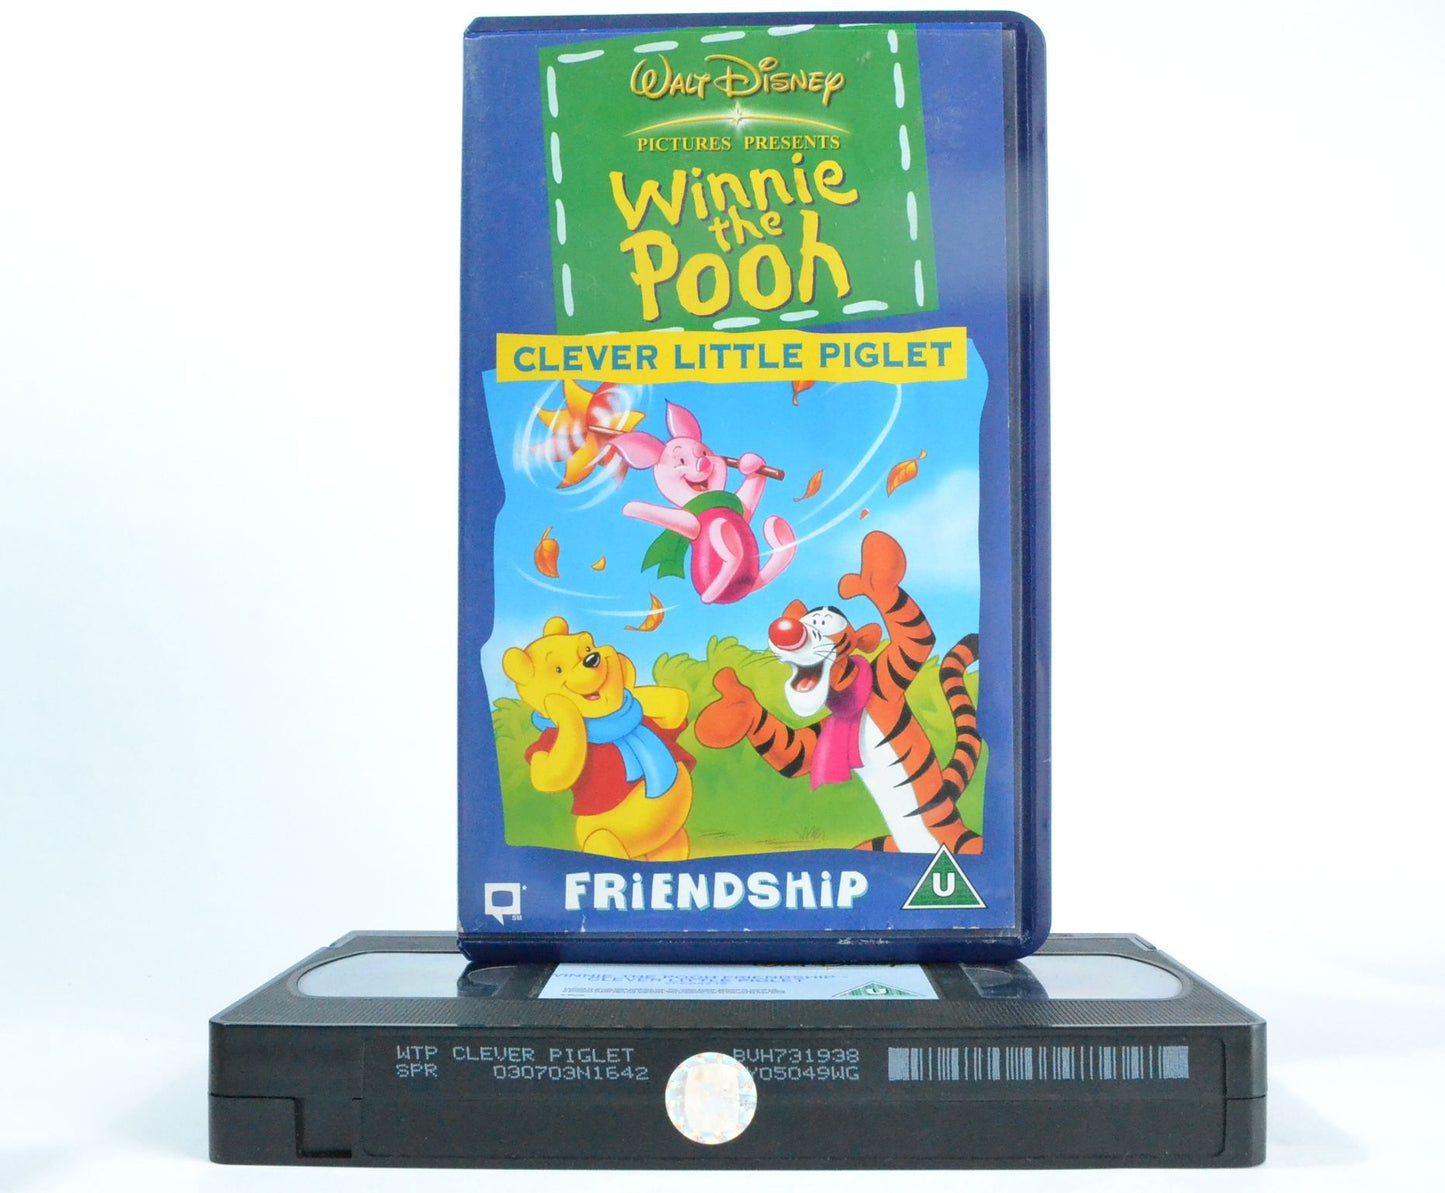 Winnie The Pooh: Clever Little Piglet - Friendship - Disney Educ Animation - VHS-